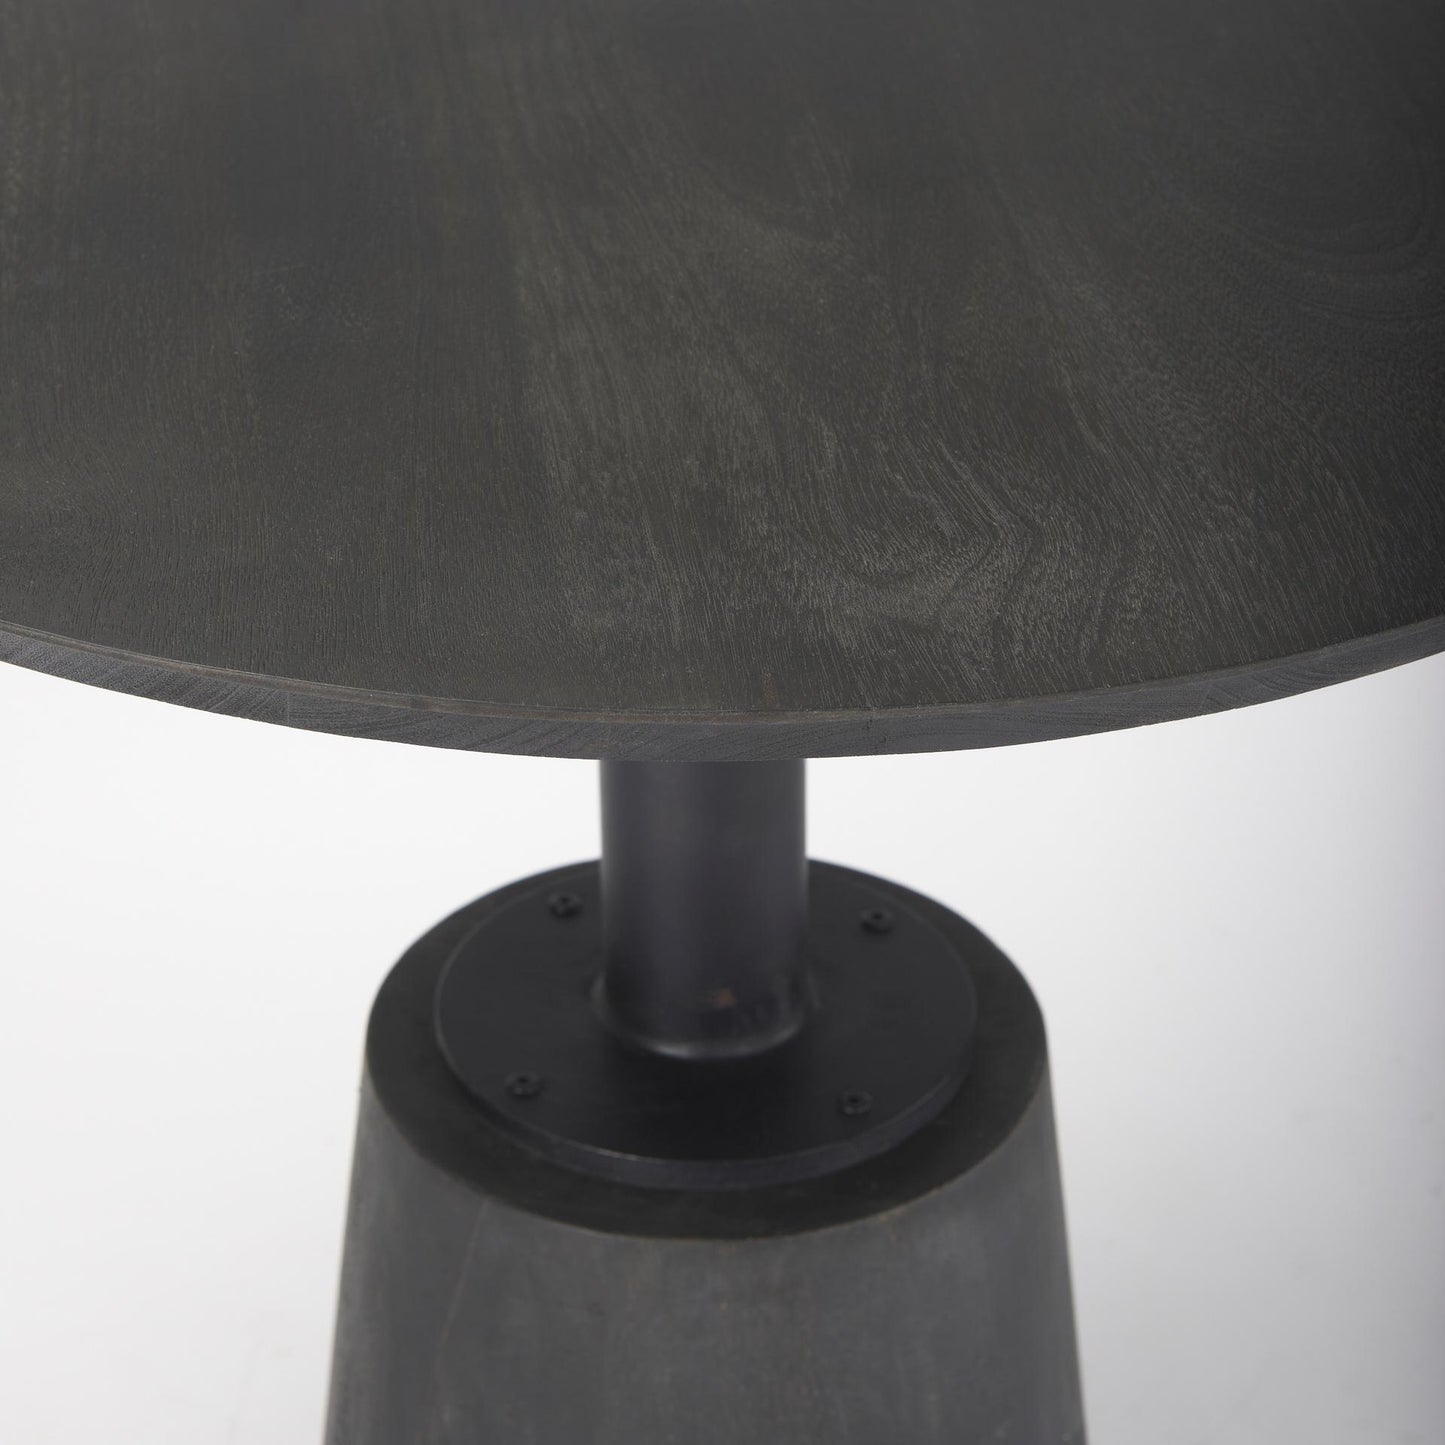 32" Round Black-Brown Wood Tabletop & Base w/ Black Metal Accent Pedestal Bistro Table